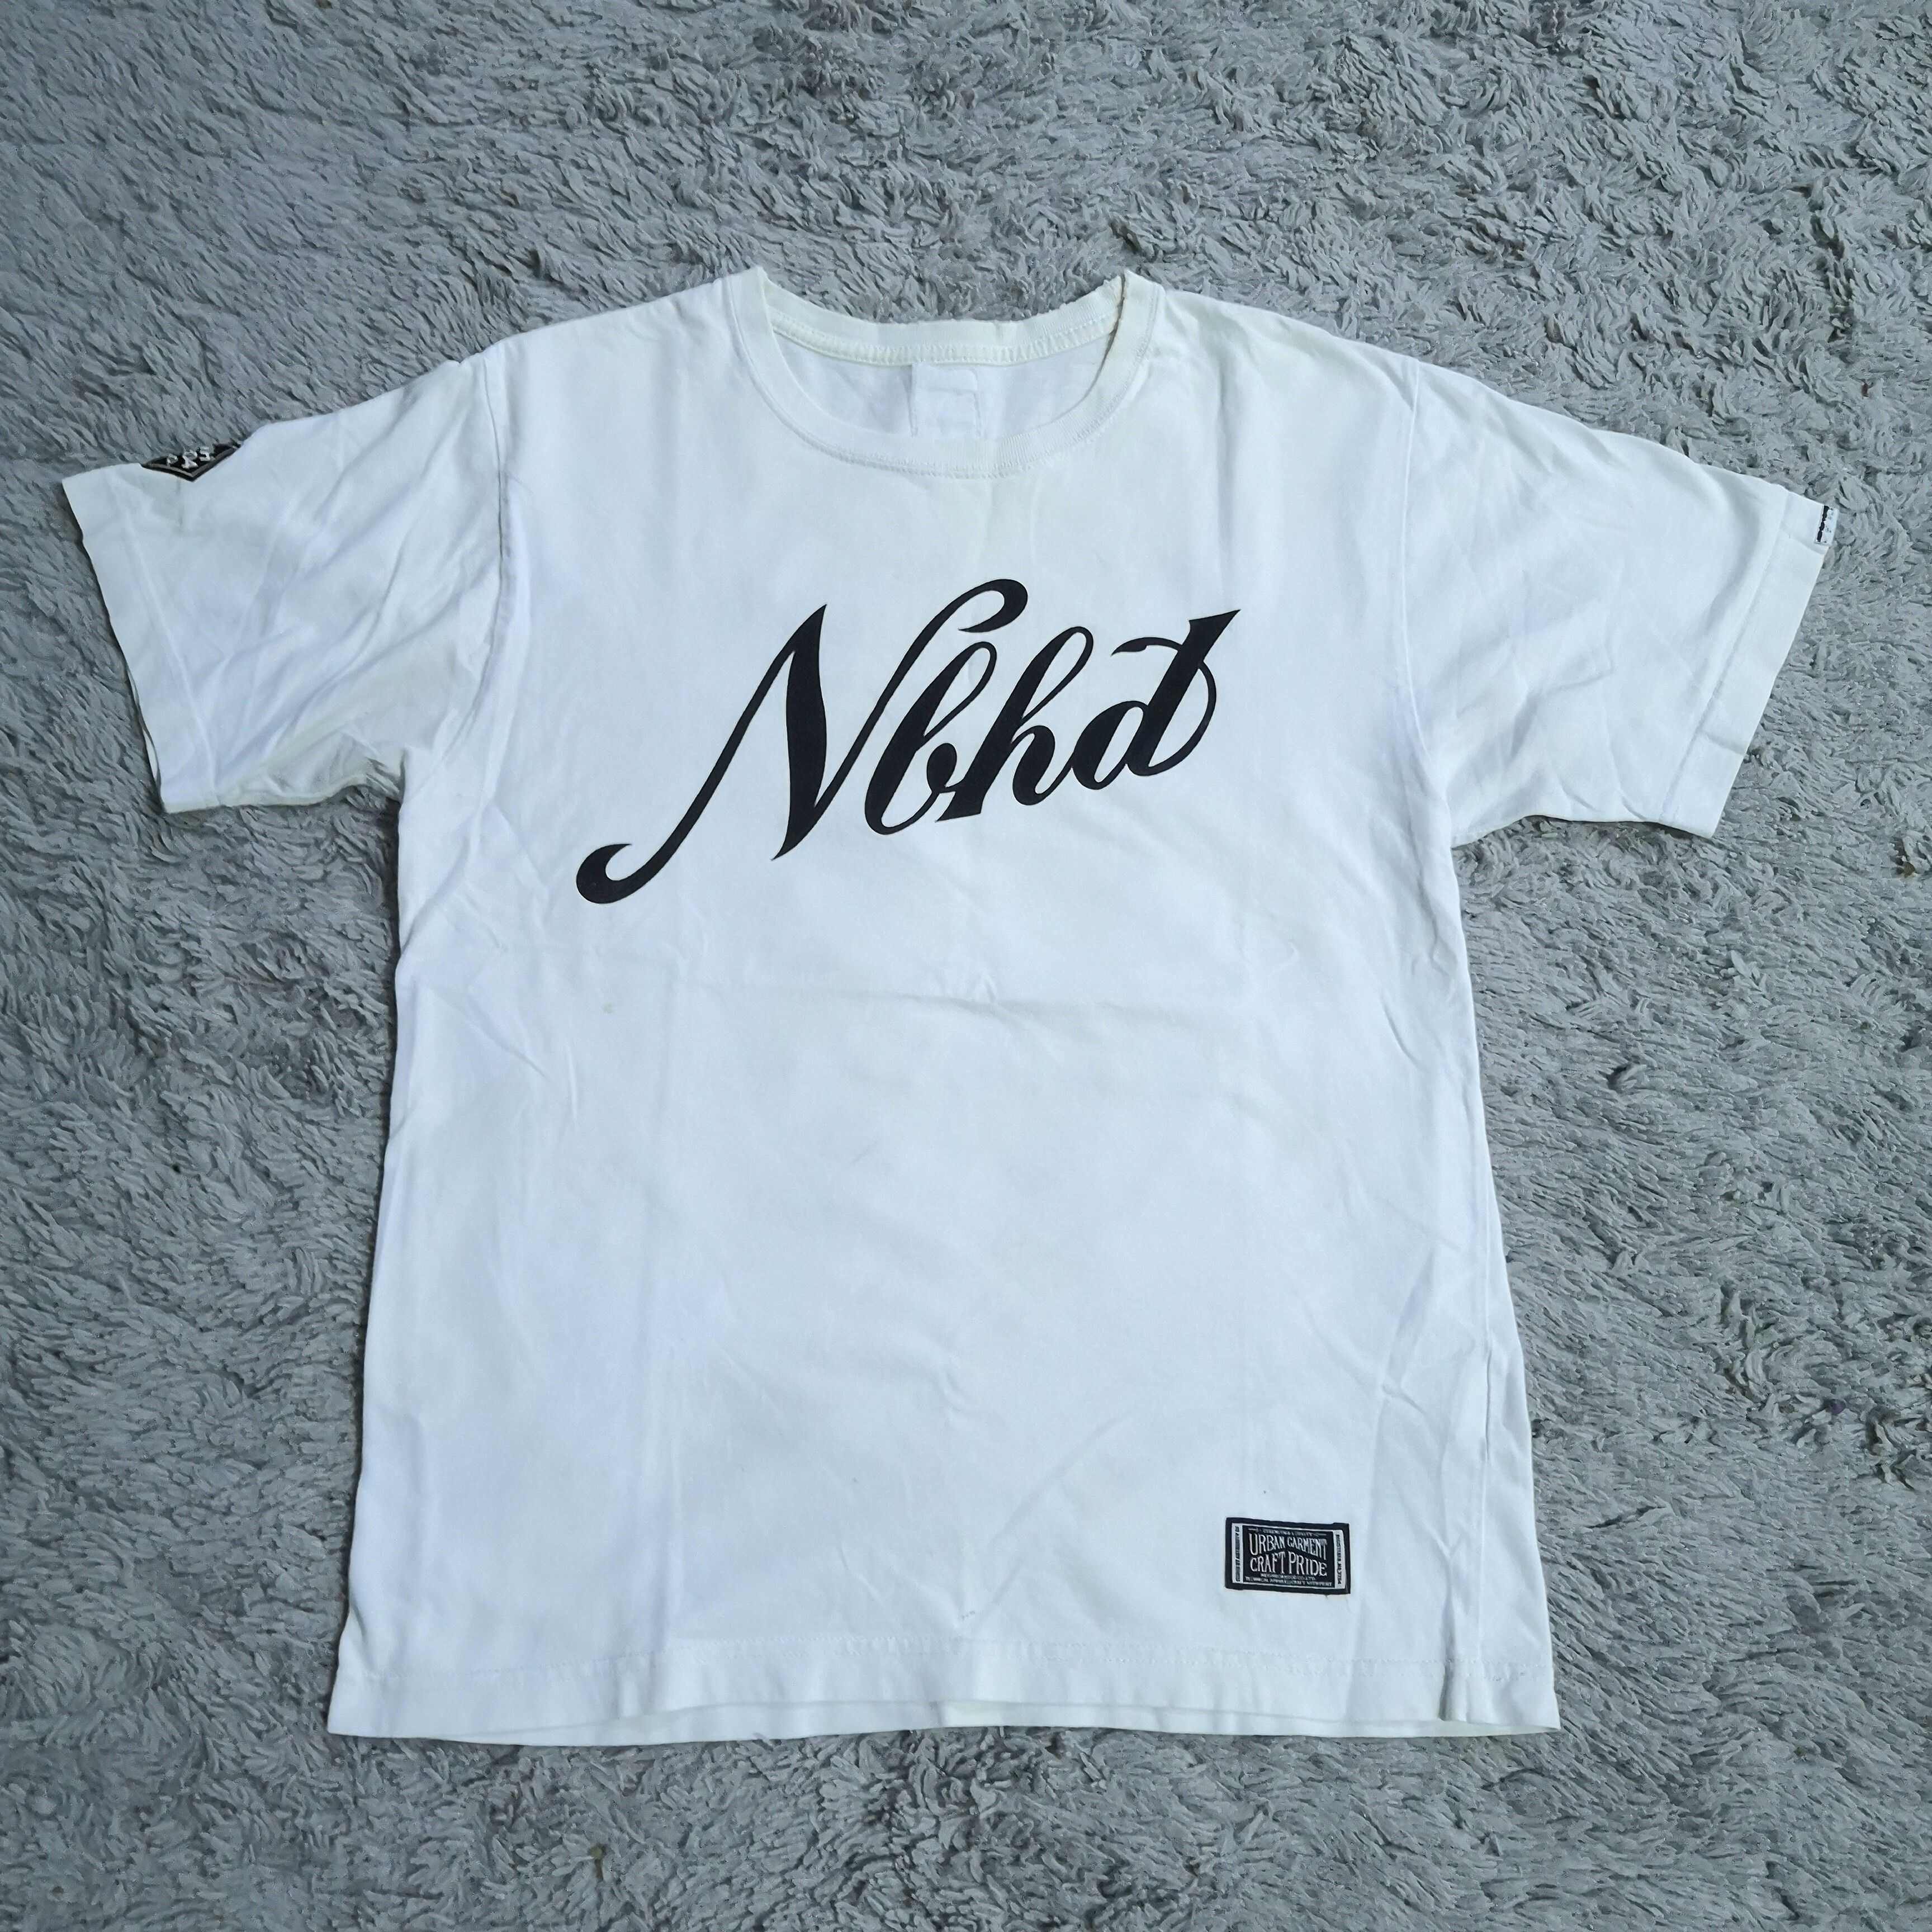 Vintage Neighborhood Japan Distressed White T-Shirt - 1